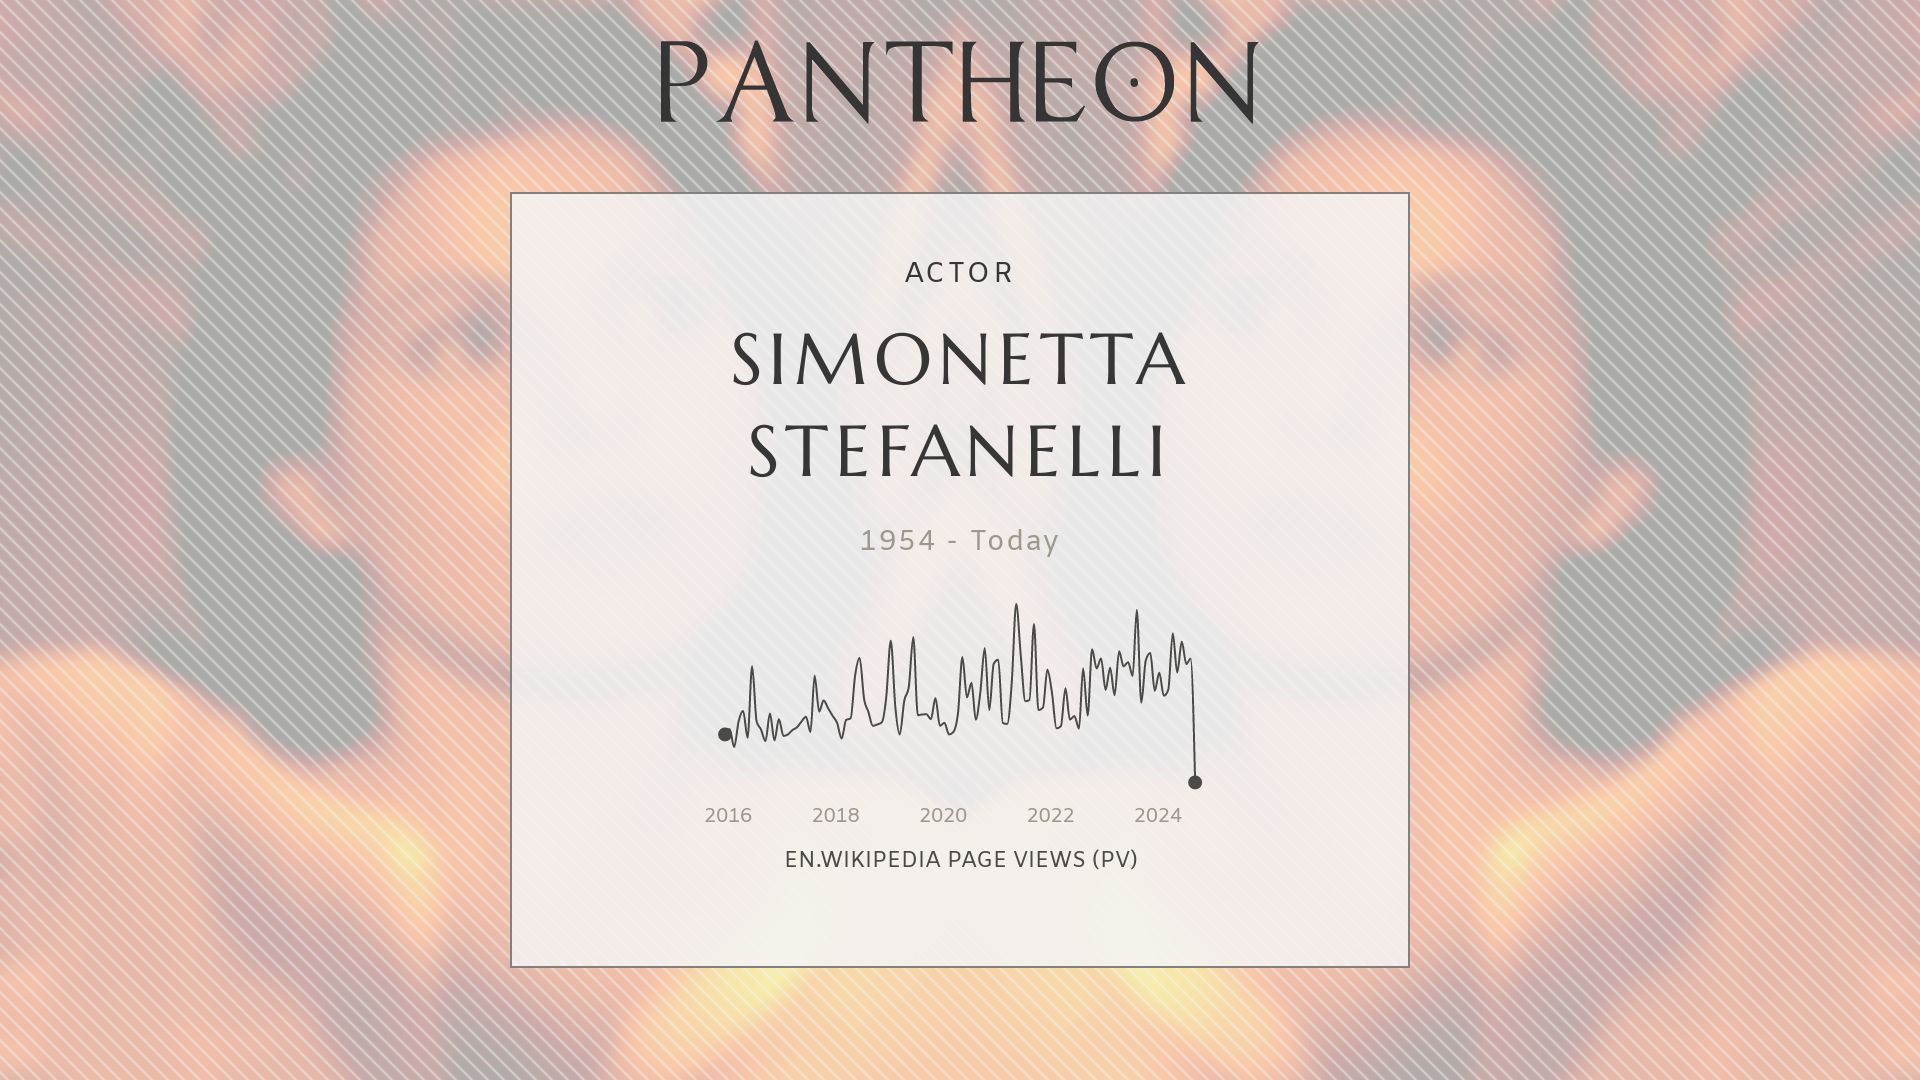 Pantheon profile of Simonetta Stefanelli, Italian actress and fashion desig...